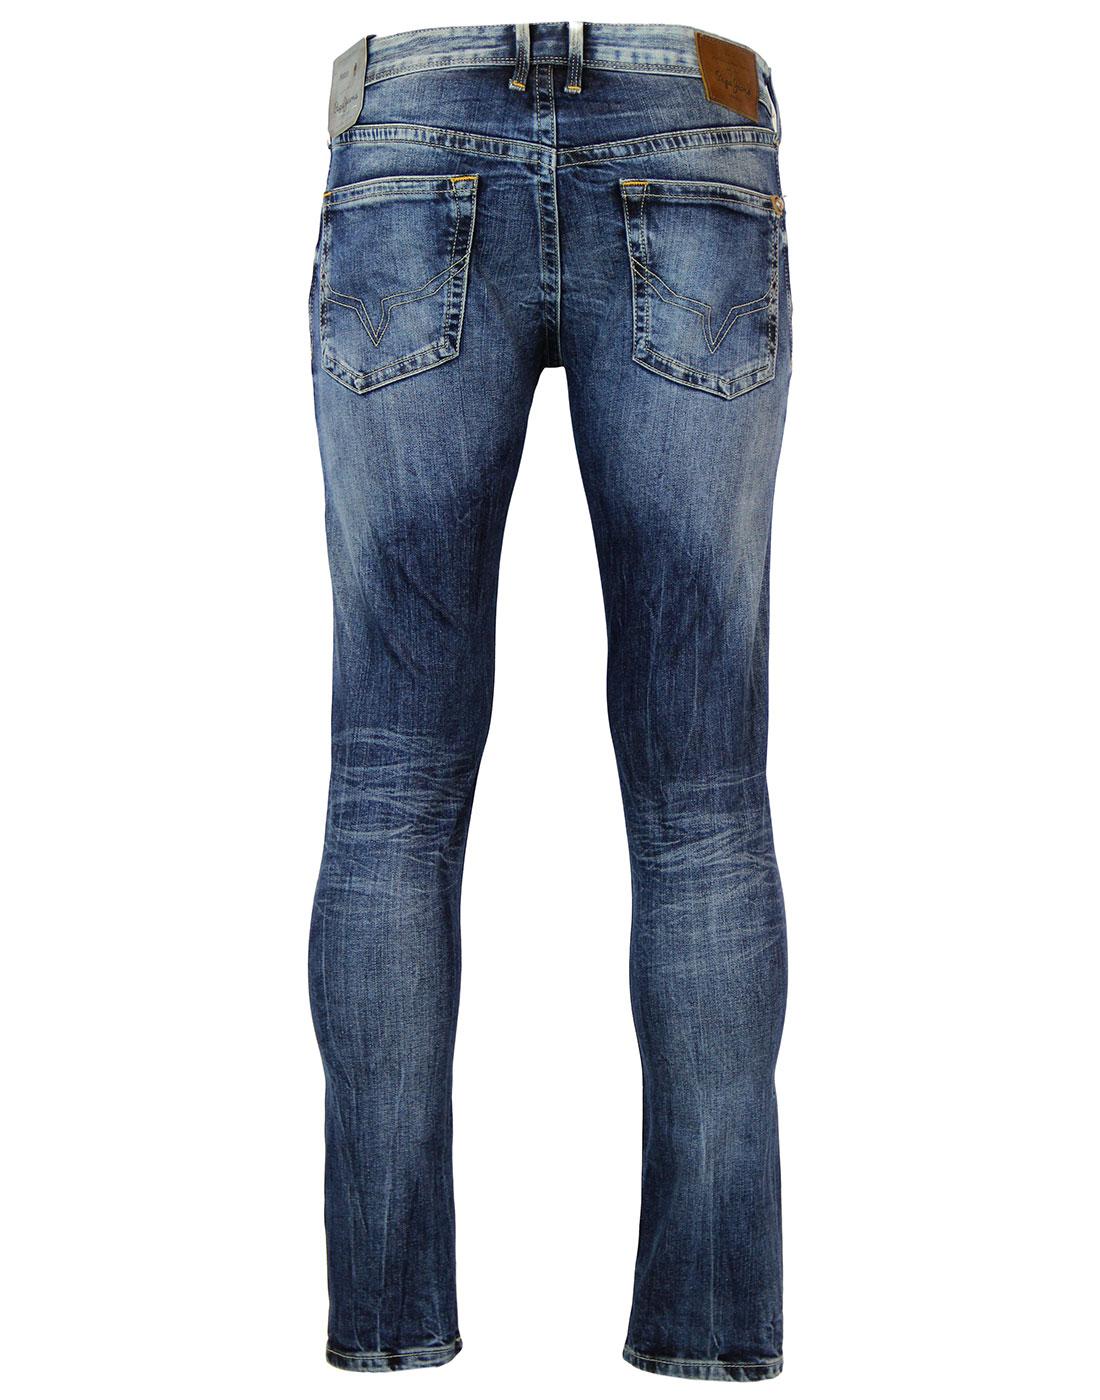 PEPE JEANS Hatch Retro Indie Mod Slim Distressed Blue Denim Jeans